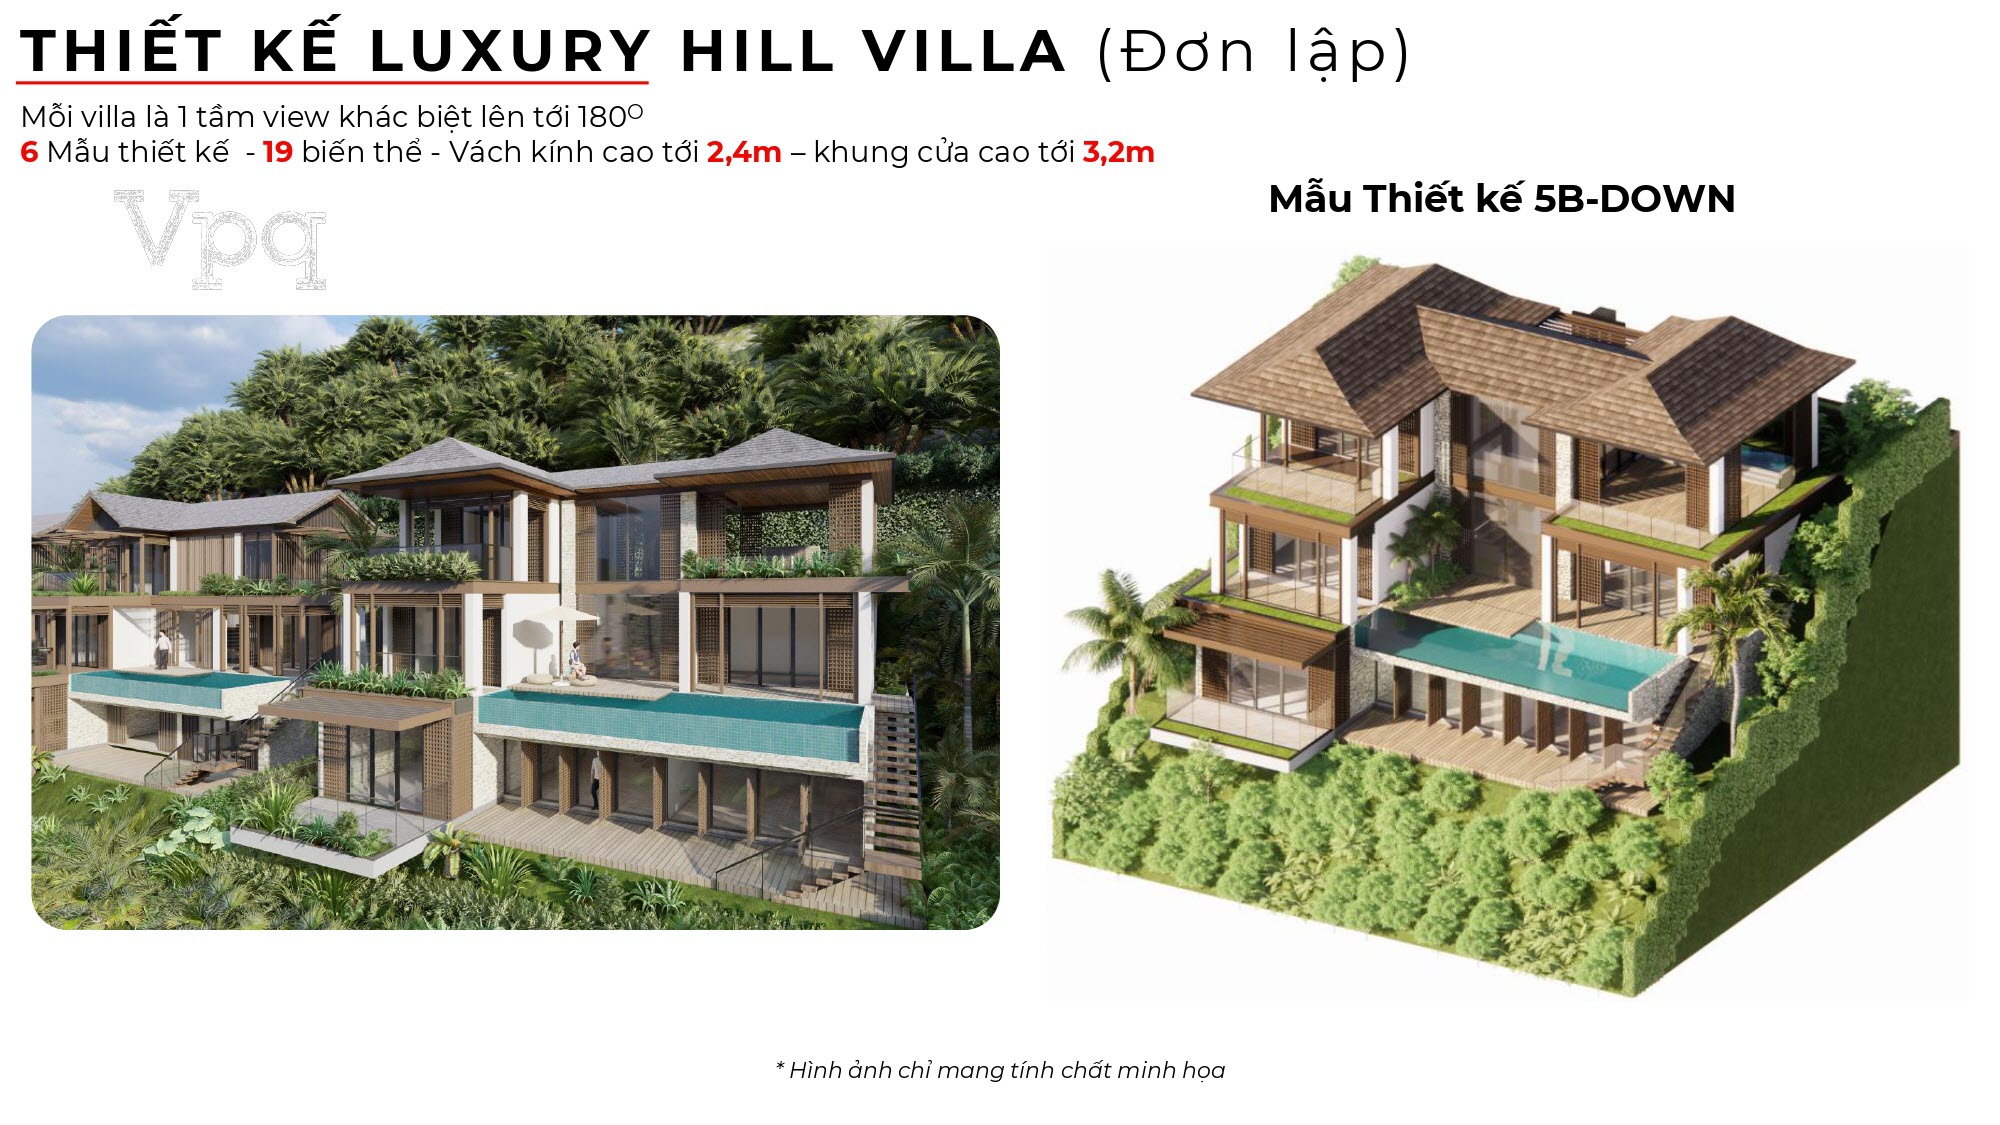 Mẫu thiết kế Makaio Luxury Hill Villa (Đơn lập): 5B - Down